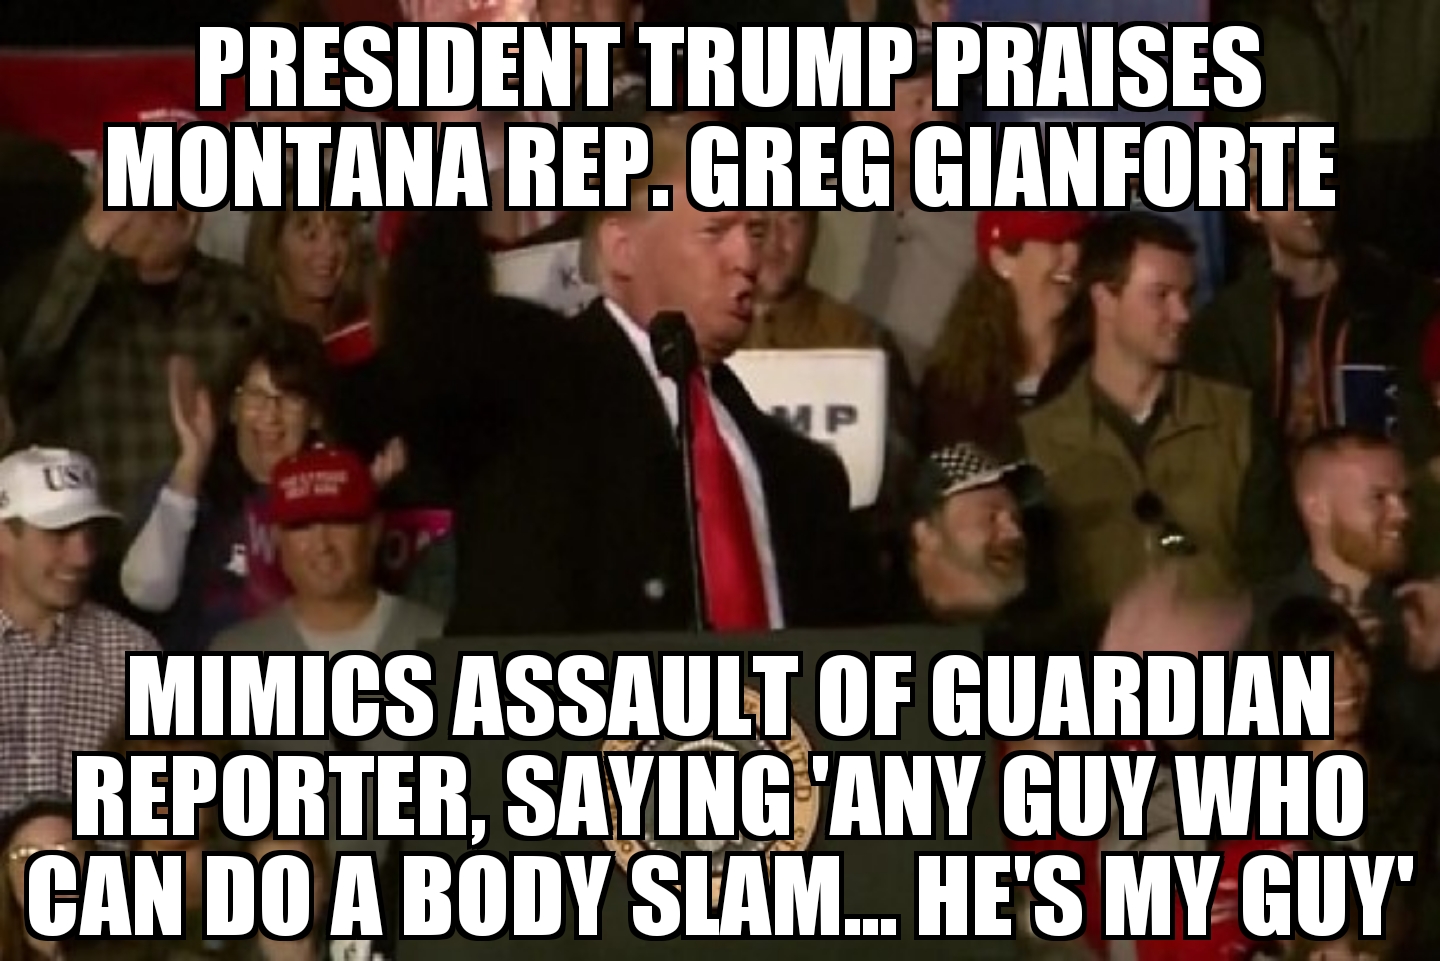 Trump praises Greg Gianforte